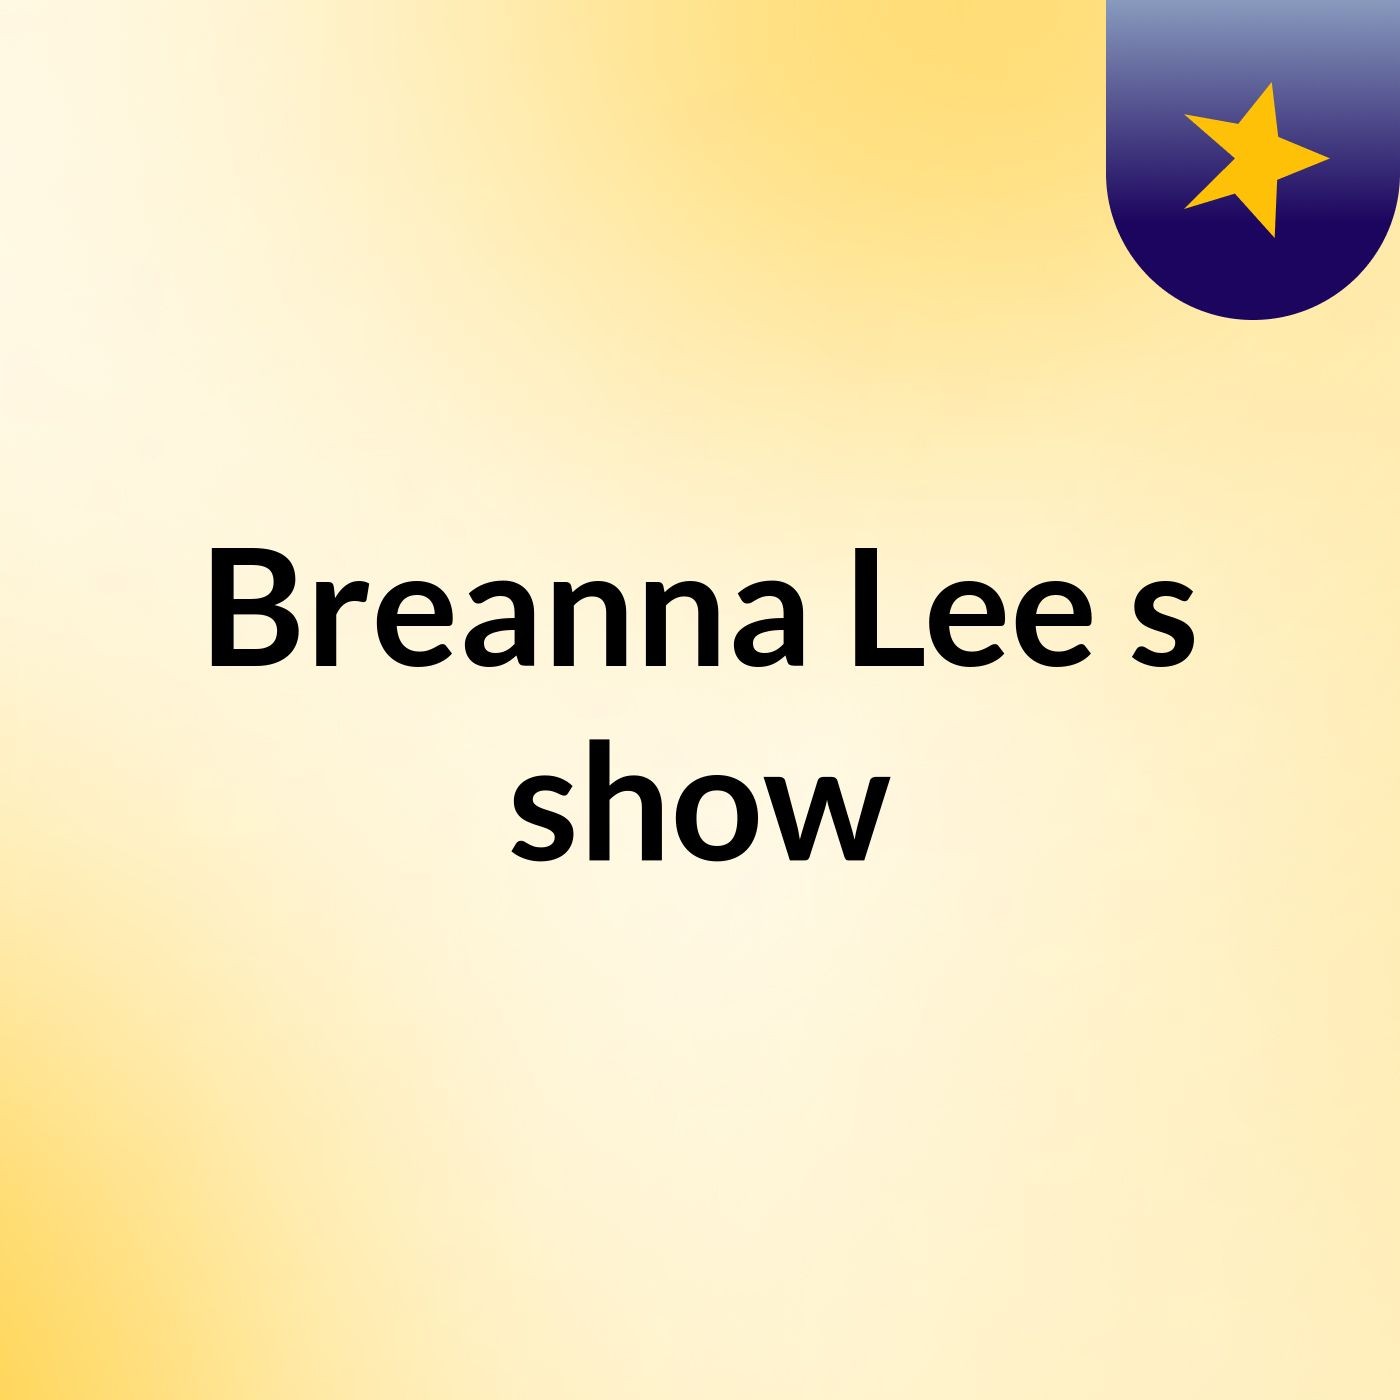 Breanna Lee's show